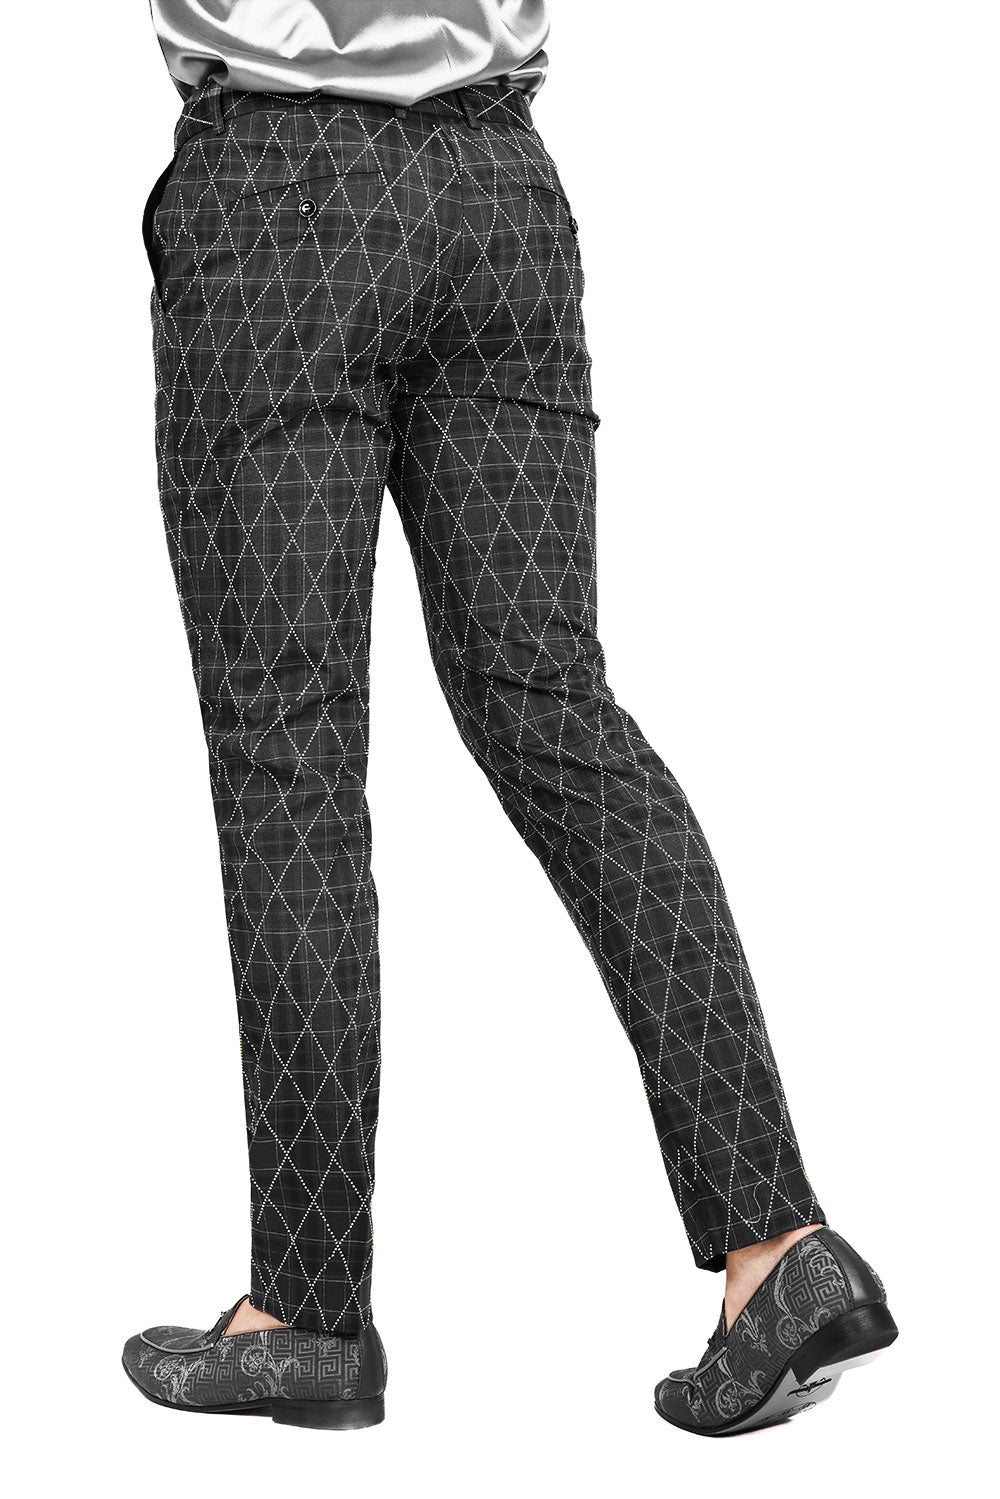 Barabas Men's Rhinestone Checkered Plaid Chino Dress Pants 2CPR1 Black